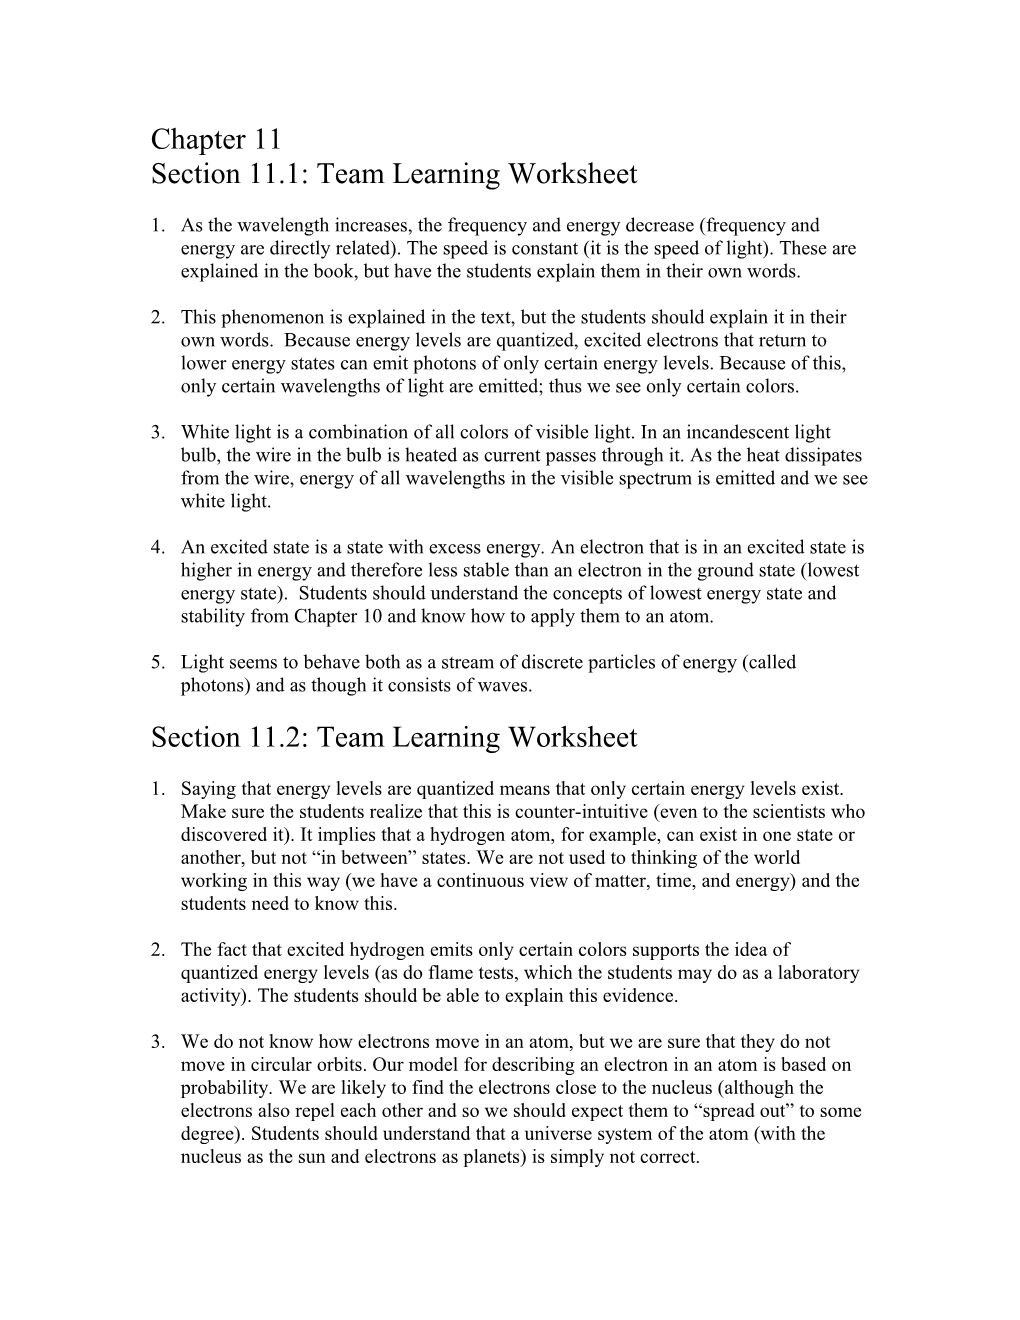 Section 11.1: Team Learning Worksheet